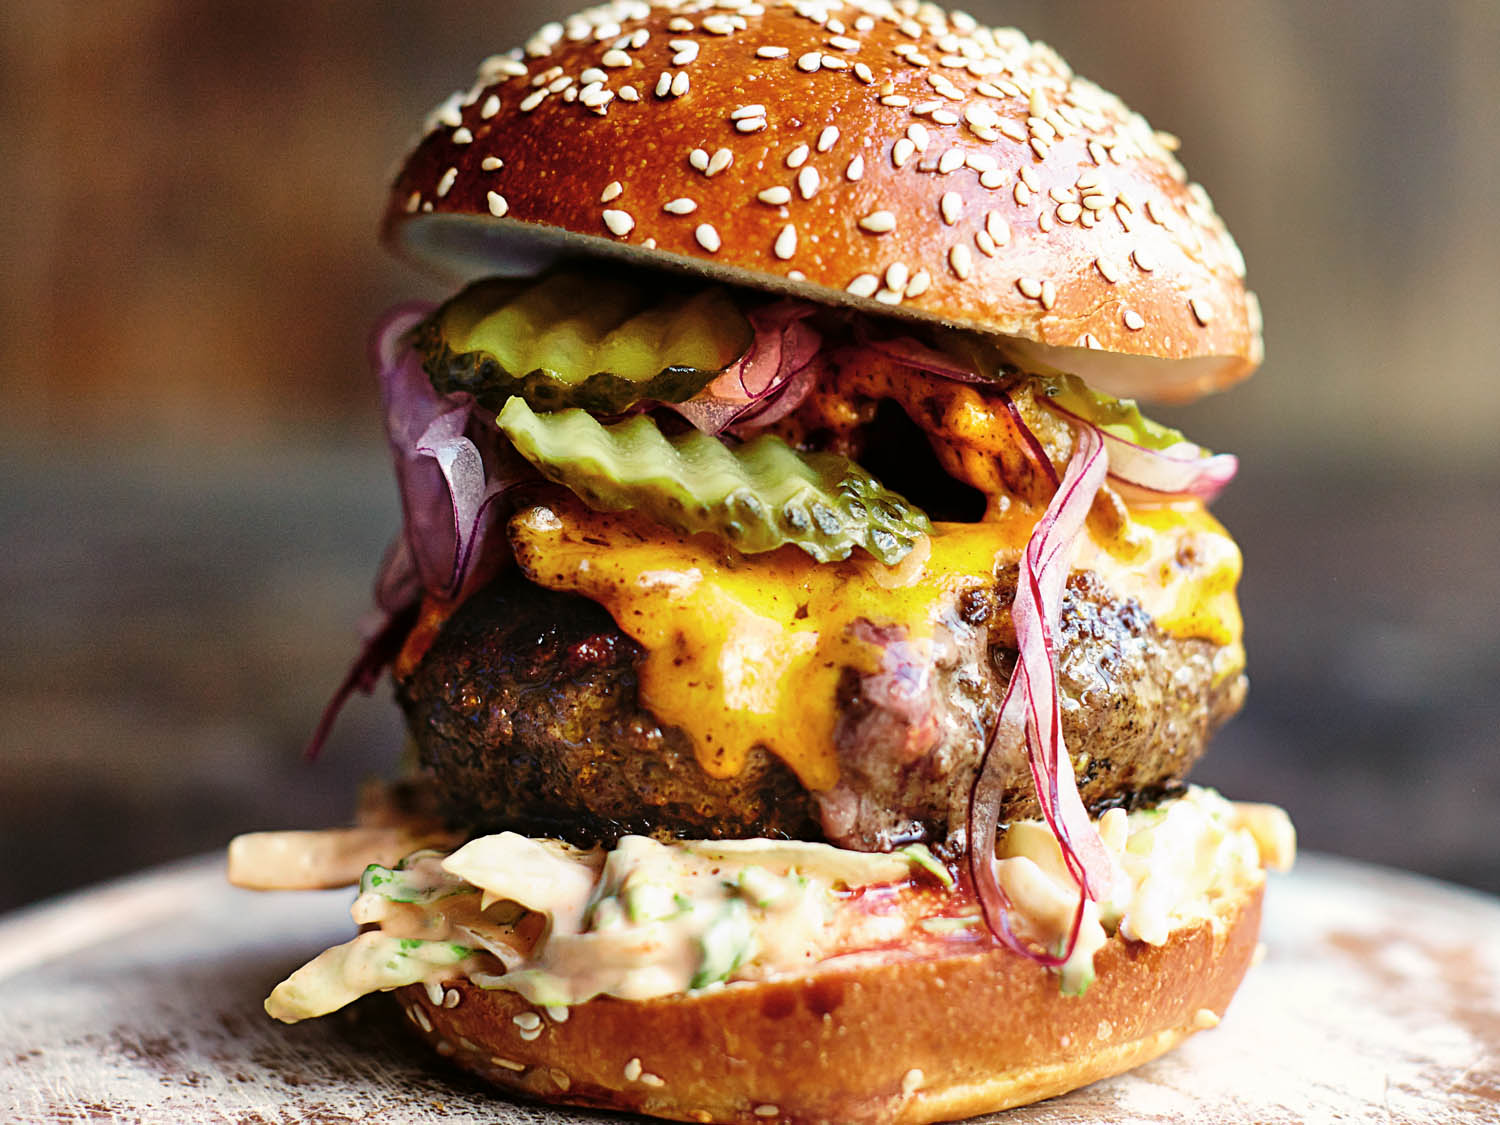 20140918-jamie-olivers-comfort-food-insanity-burger-david-loftus-thumb-1500xauto-411285